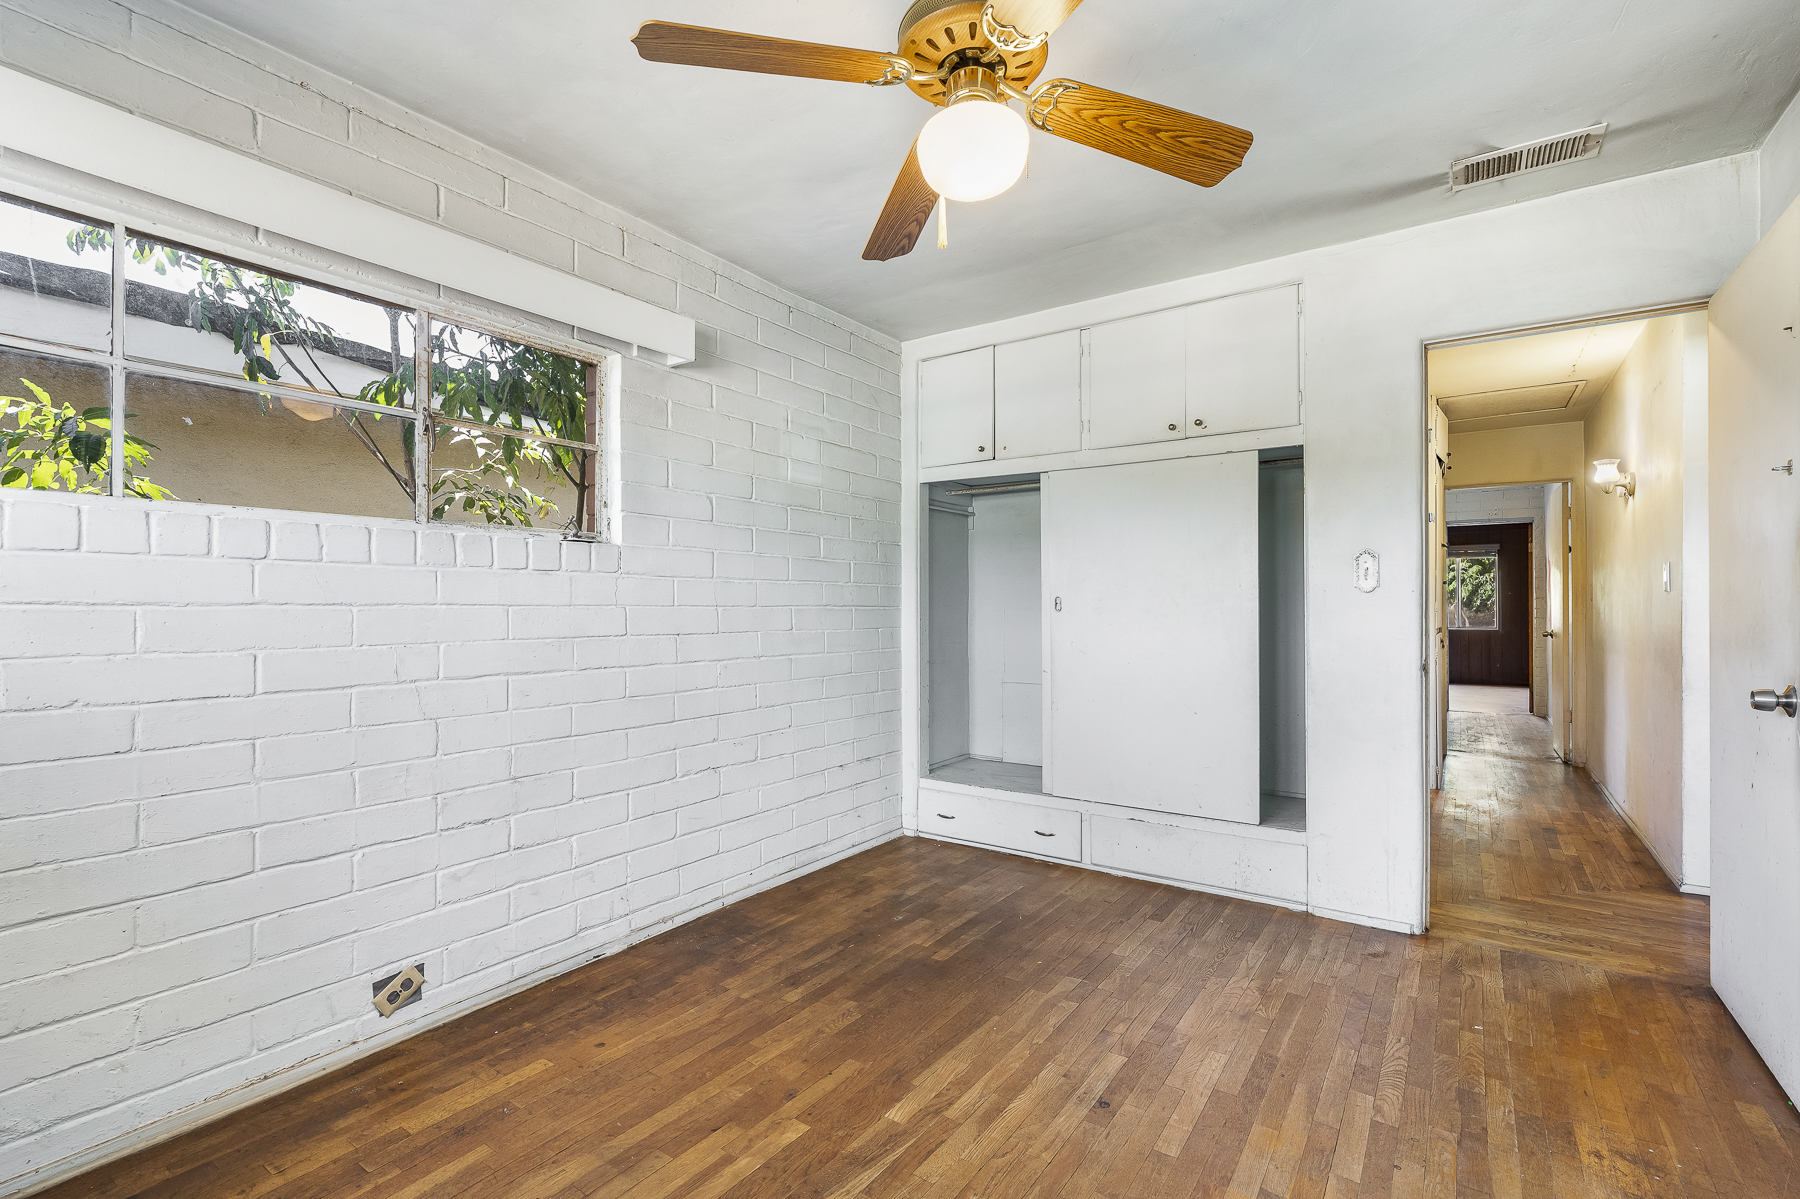 319 E. Francis Ave, La Habra, CA 90631: Interior white brick room and hallway shot.